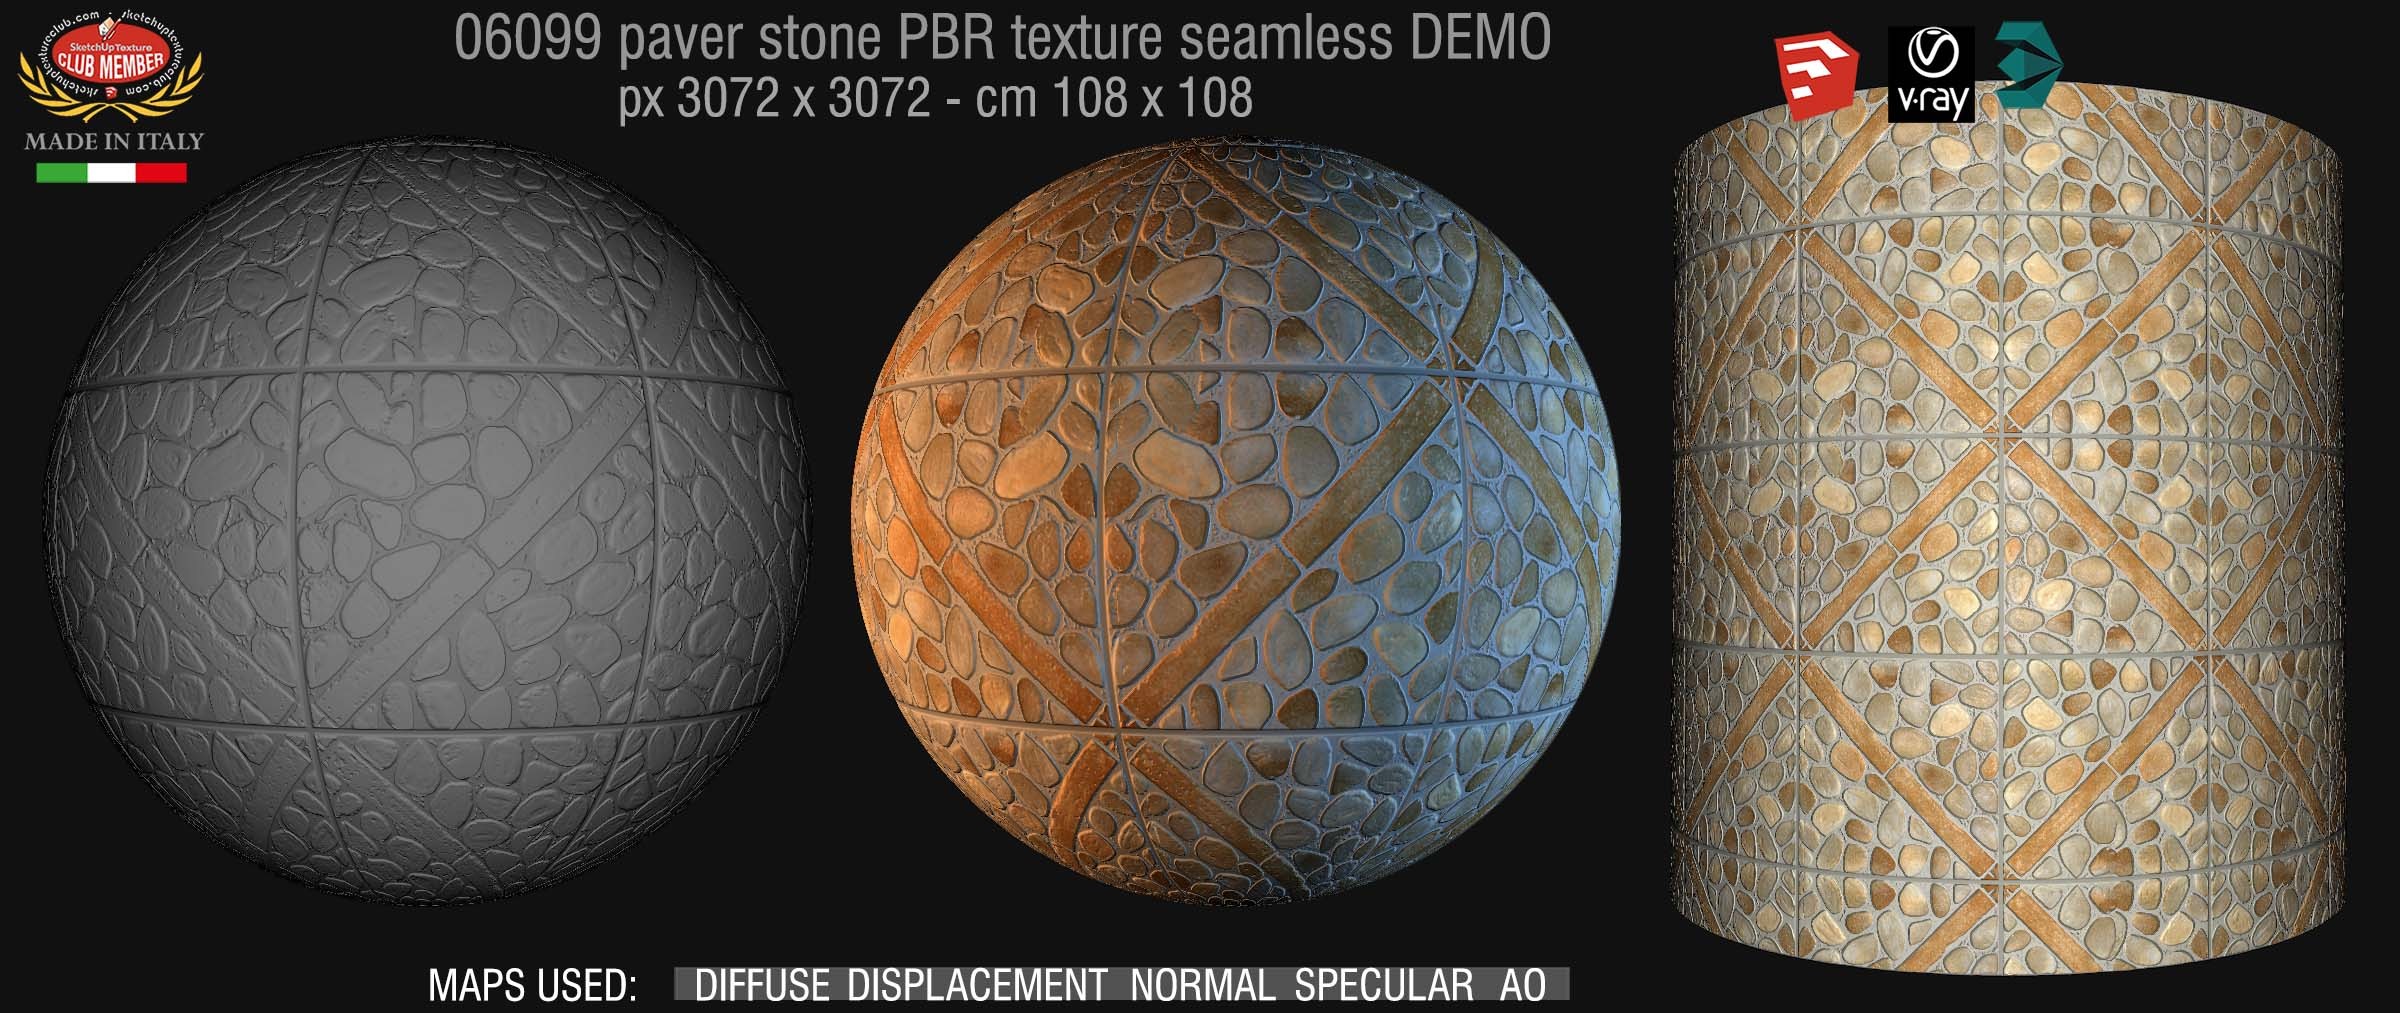 06099 paver stone PBR texture seamless DEMO